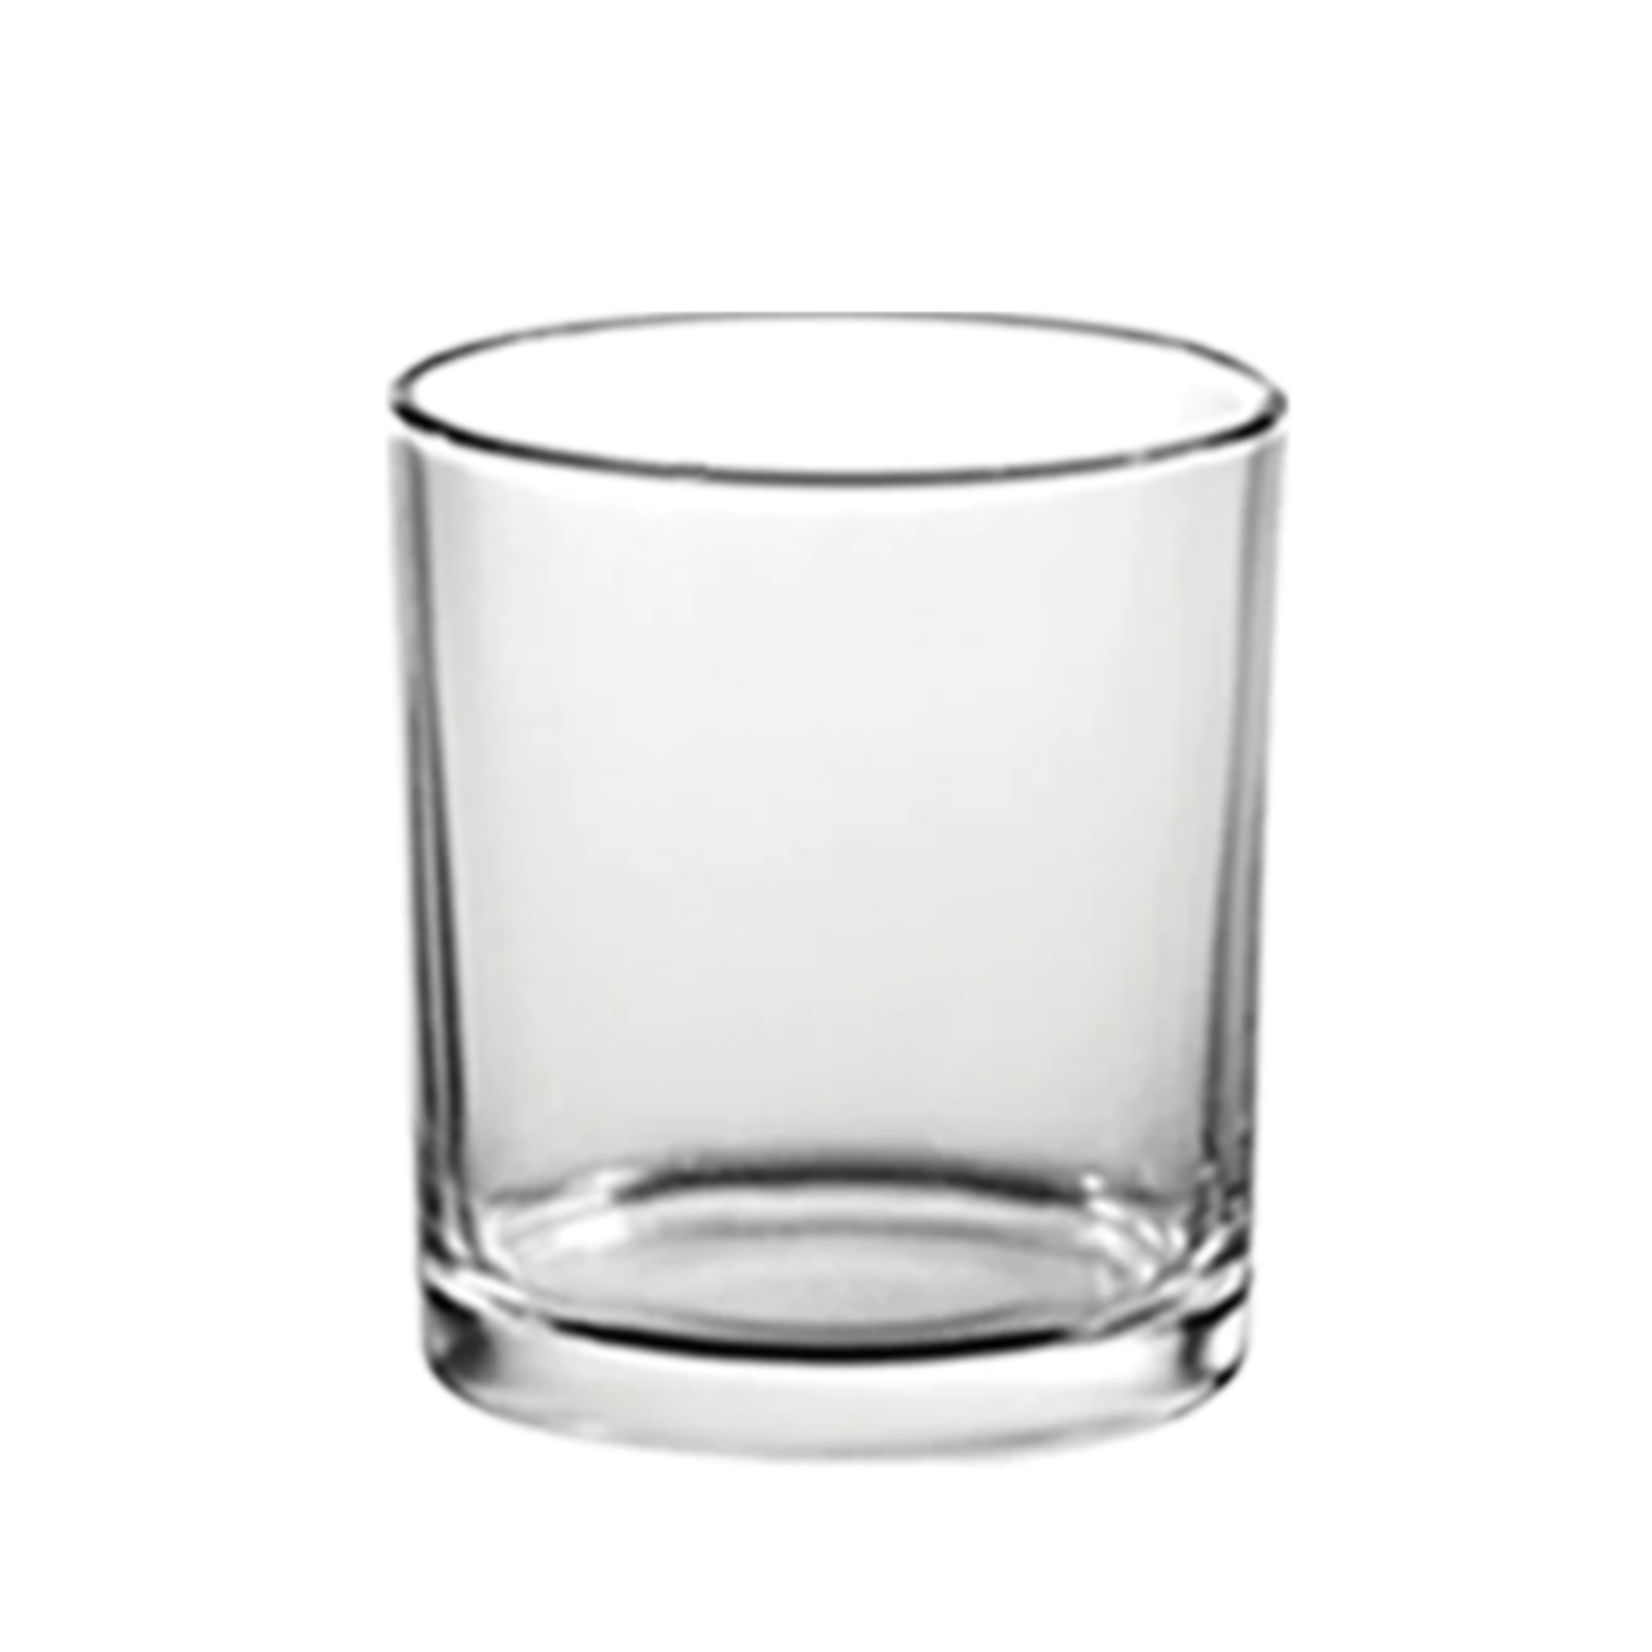 3.5”H X 3.15” CLEAR GLASS CYLINDER/VOTIVE